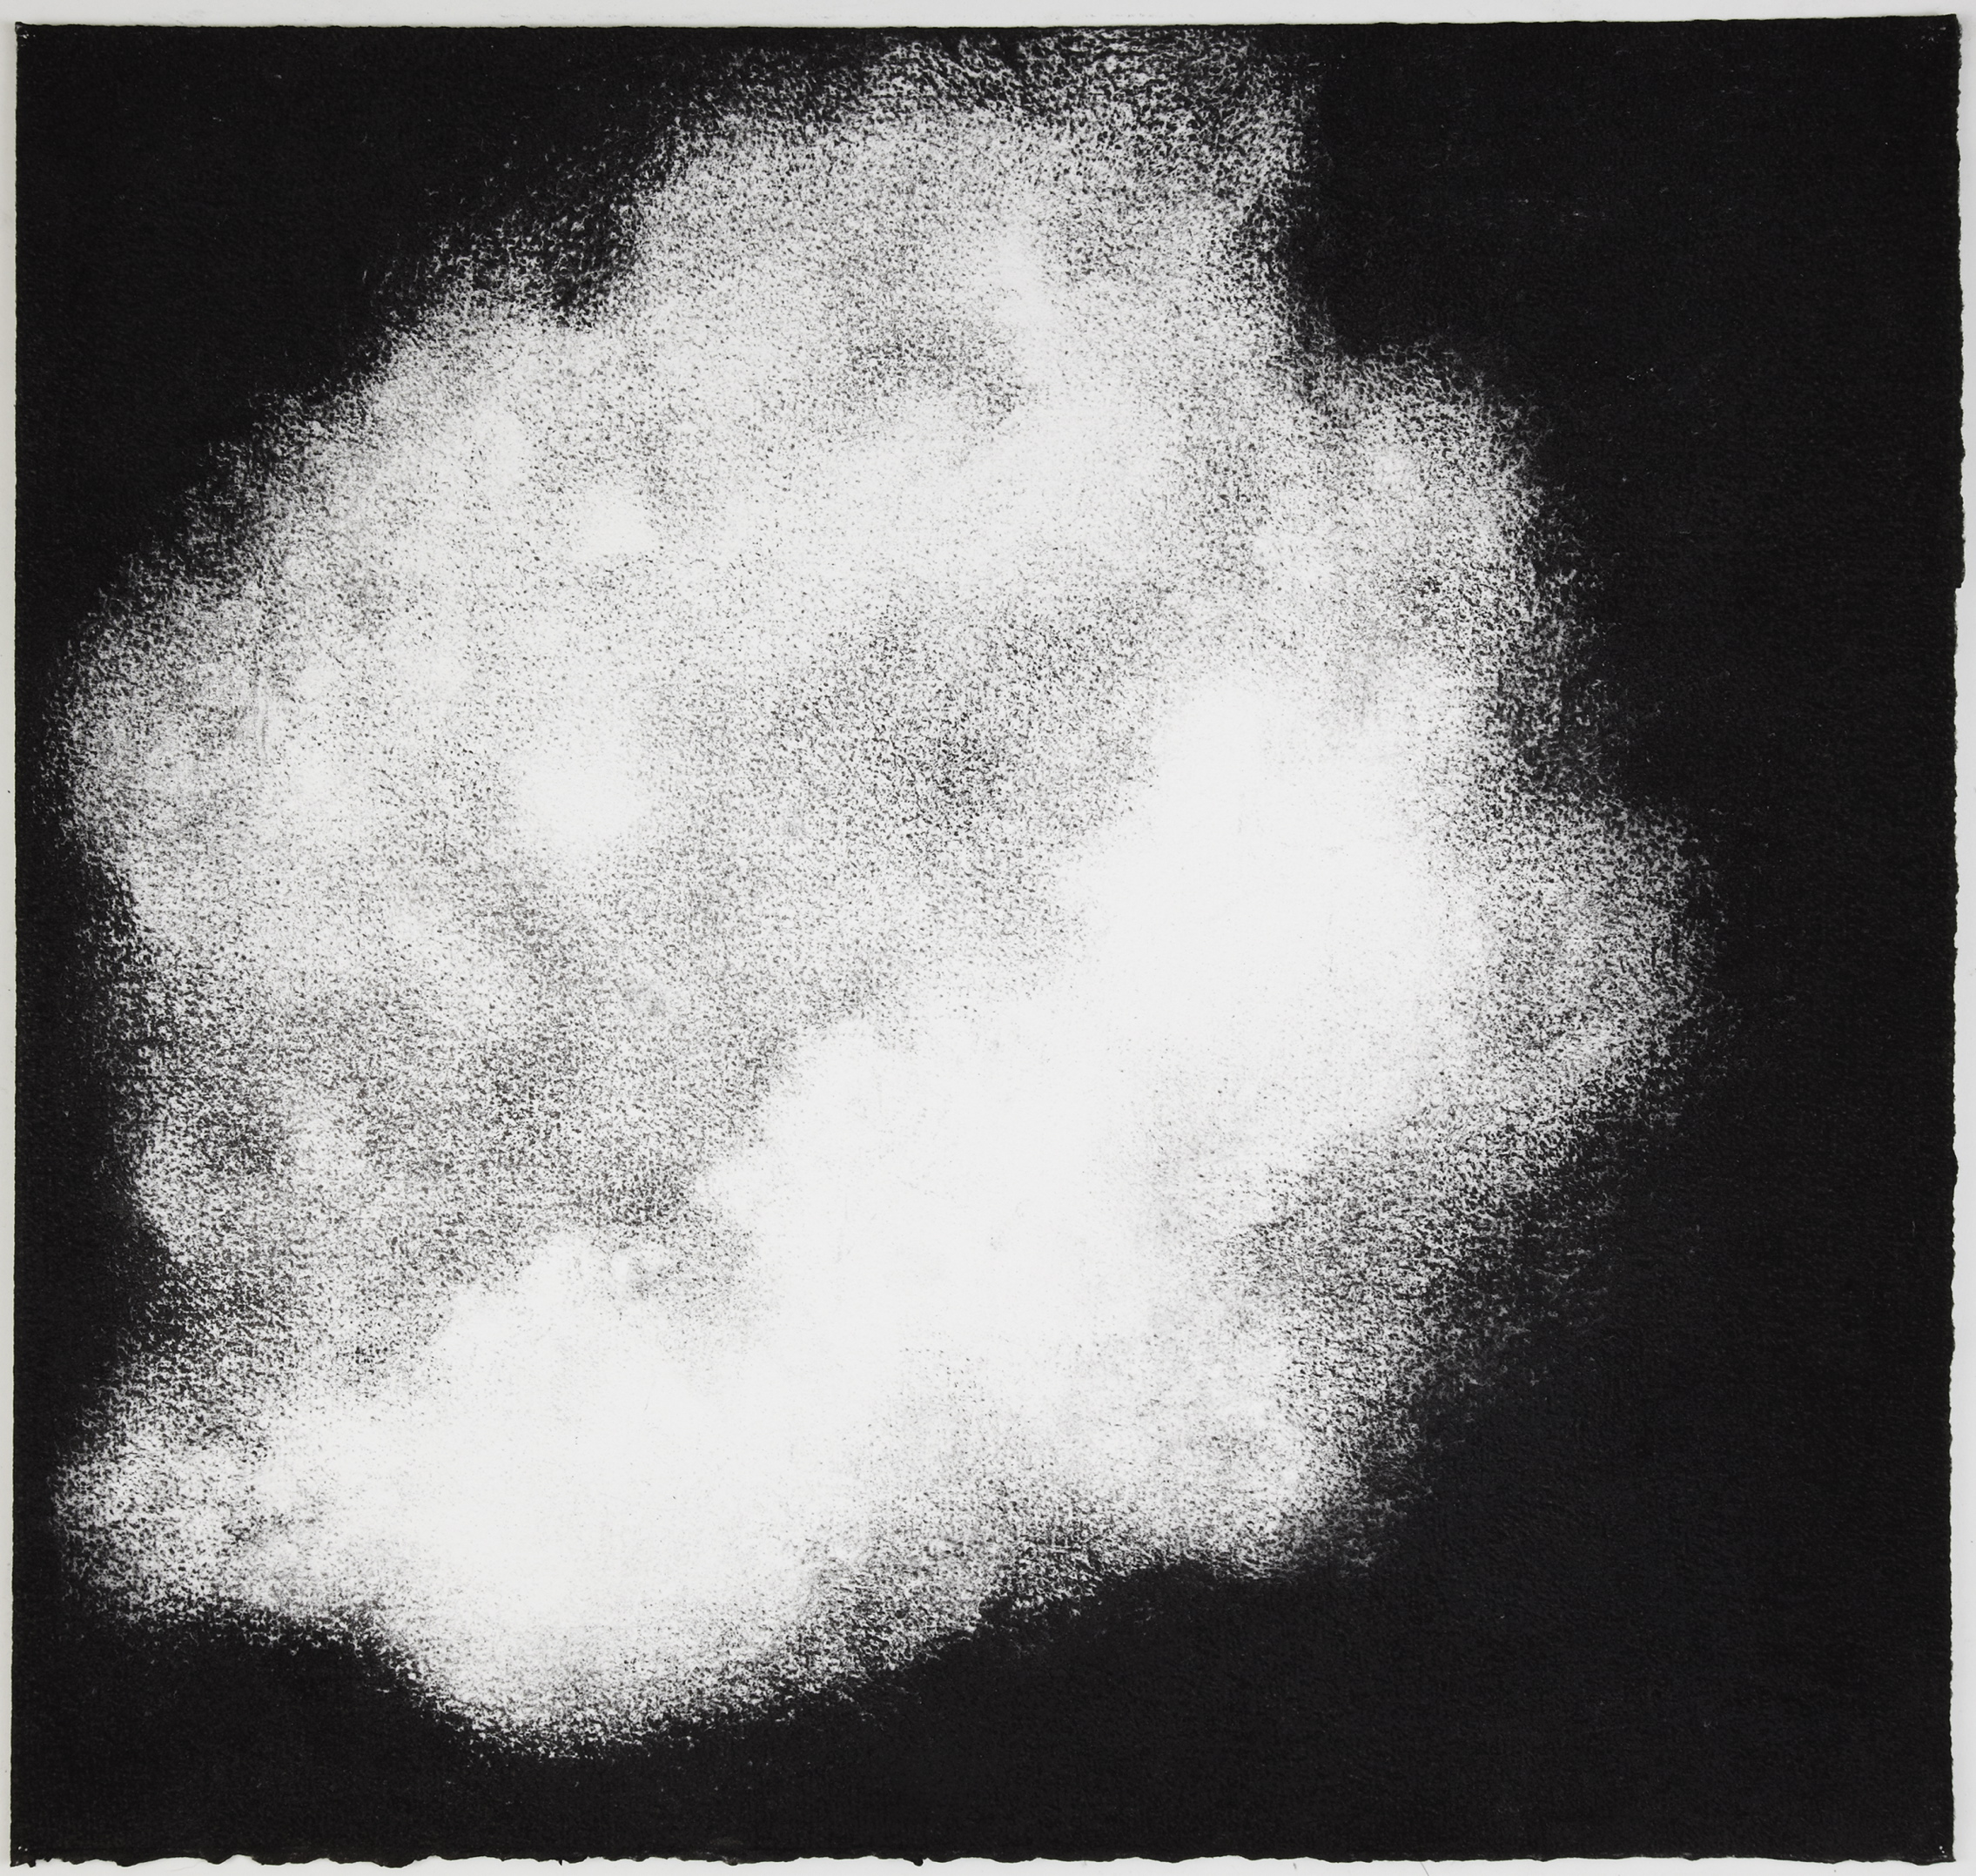  Sea sponge, 2012,&nbsp;charcoal on paper, 57 x 60 cm 